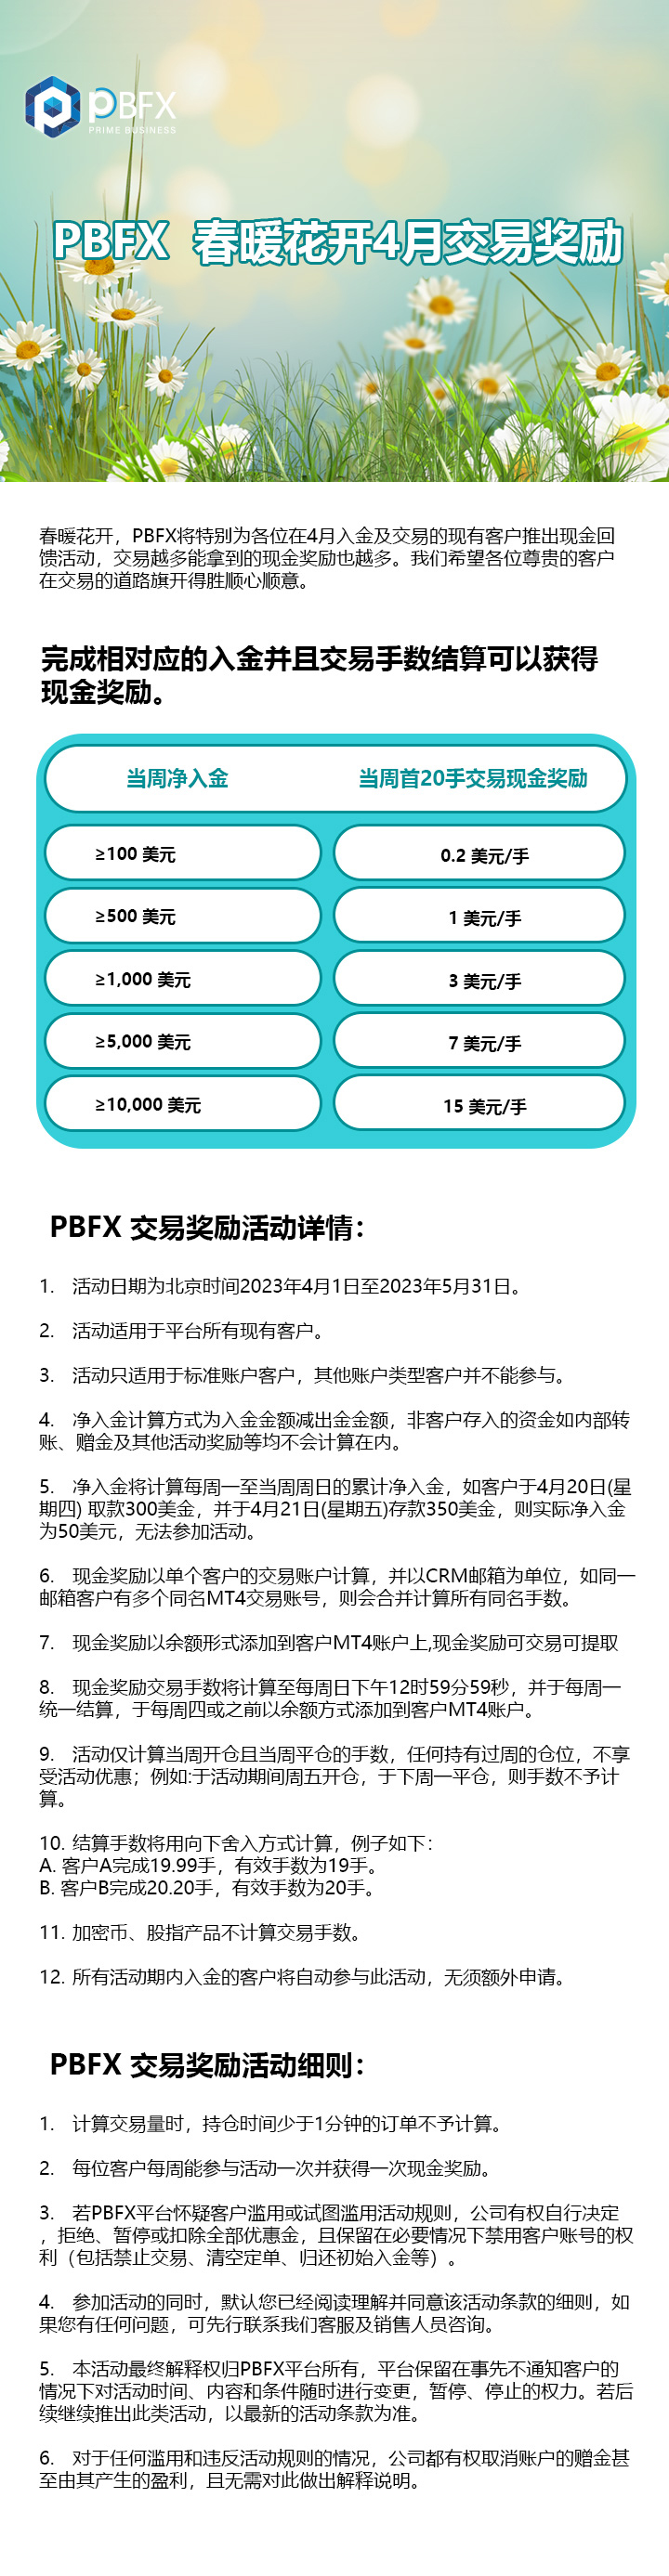 PBFX 春暖花开4月交易奖励(已过期)